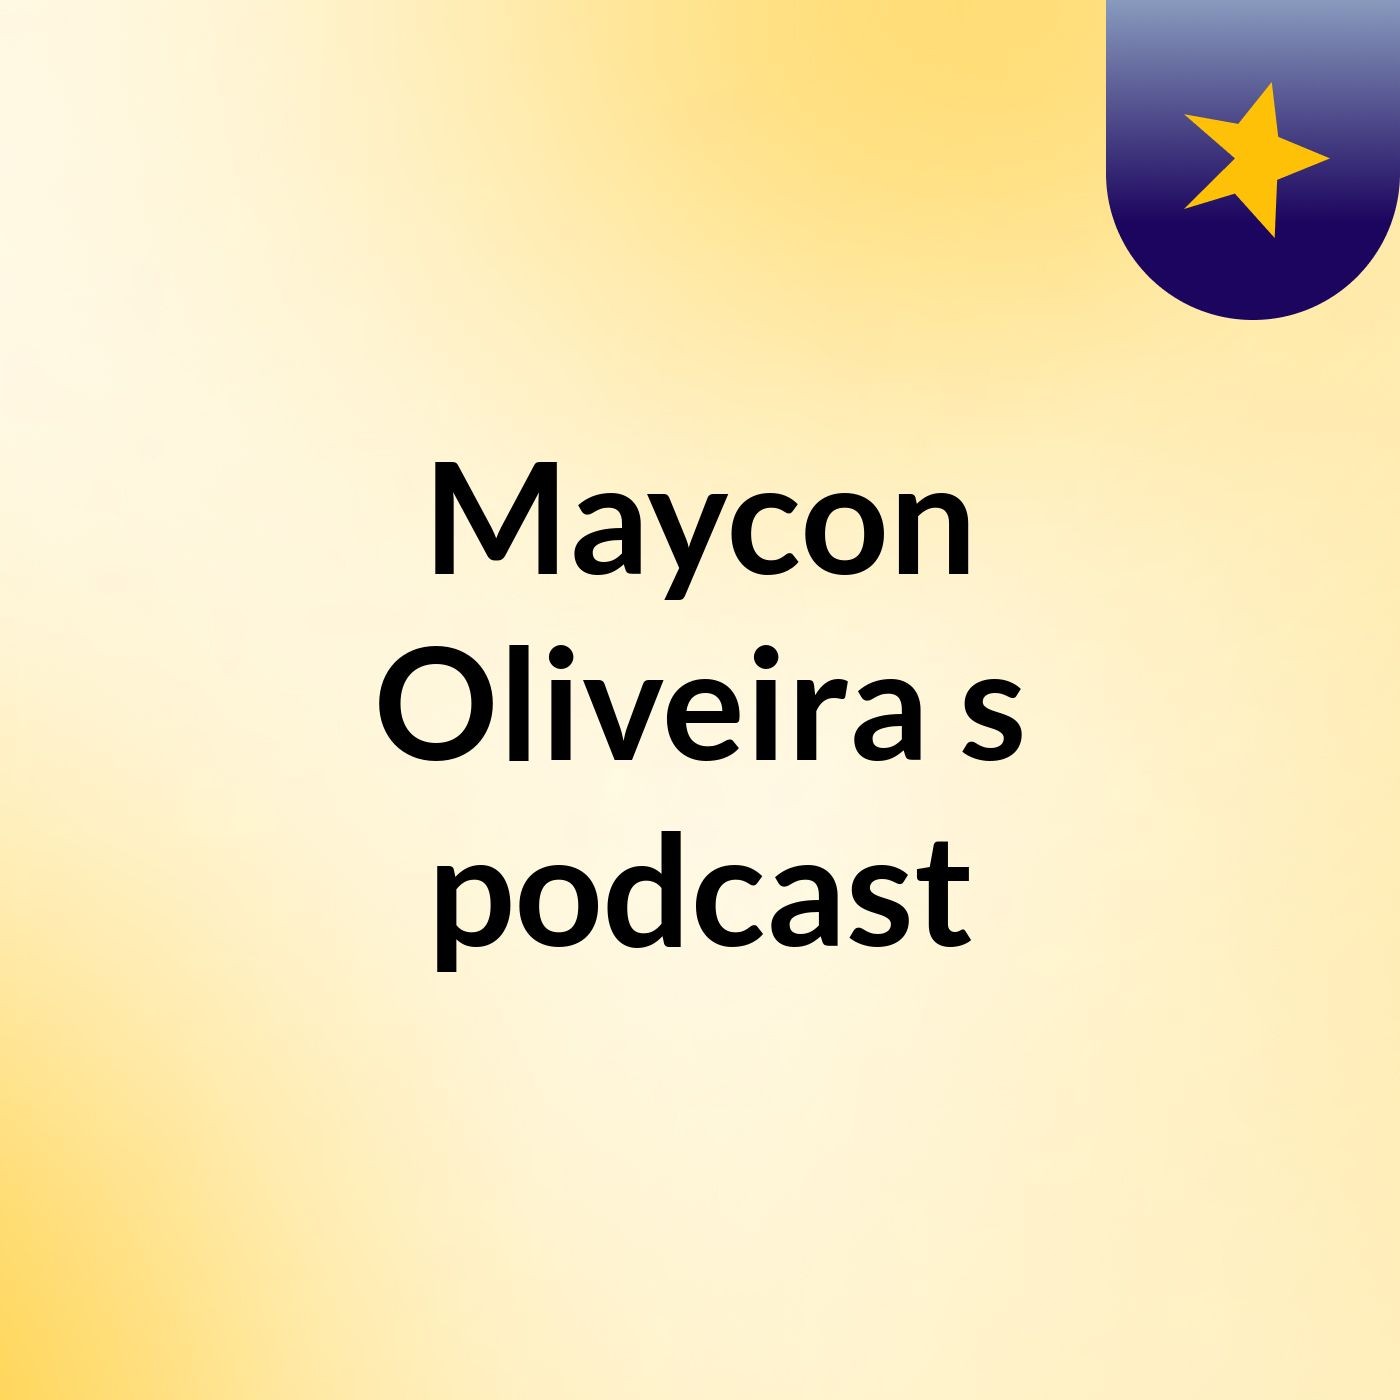 Maycon Oliveira's podcast